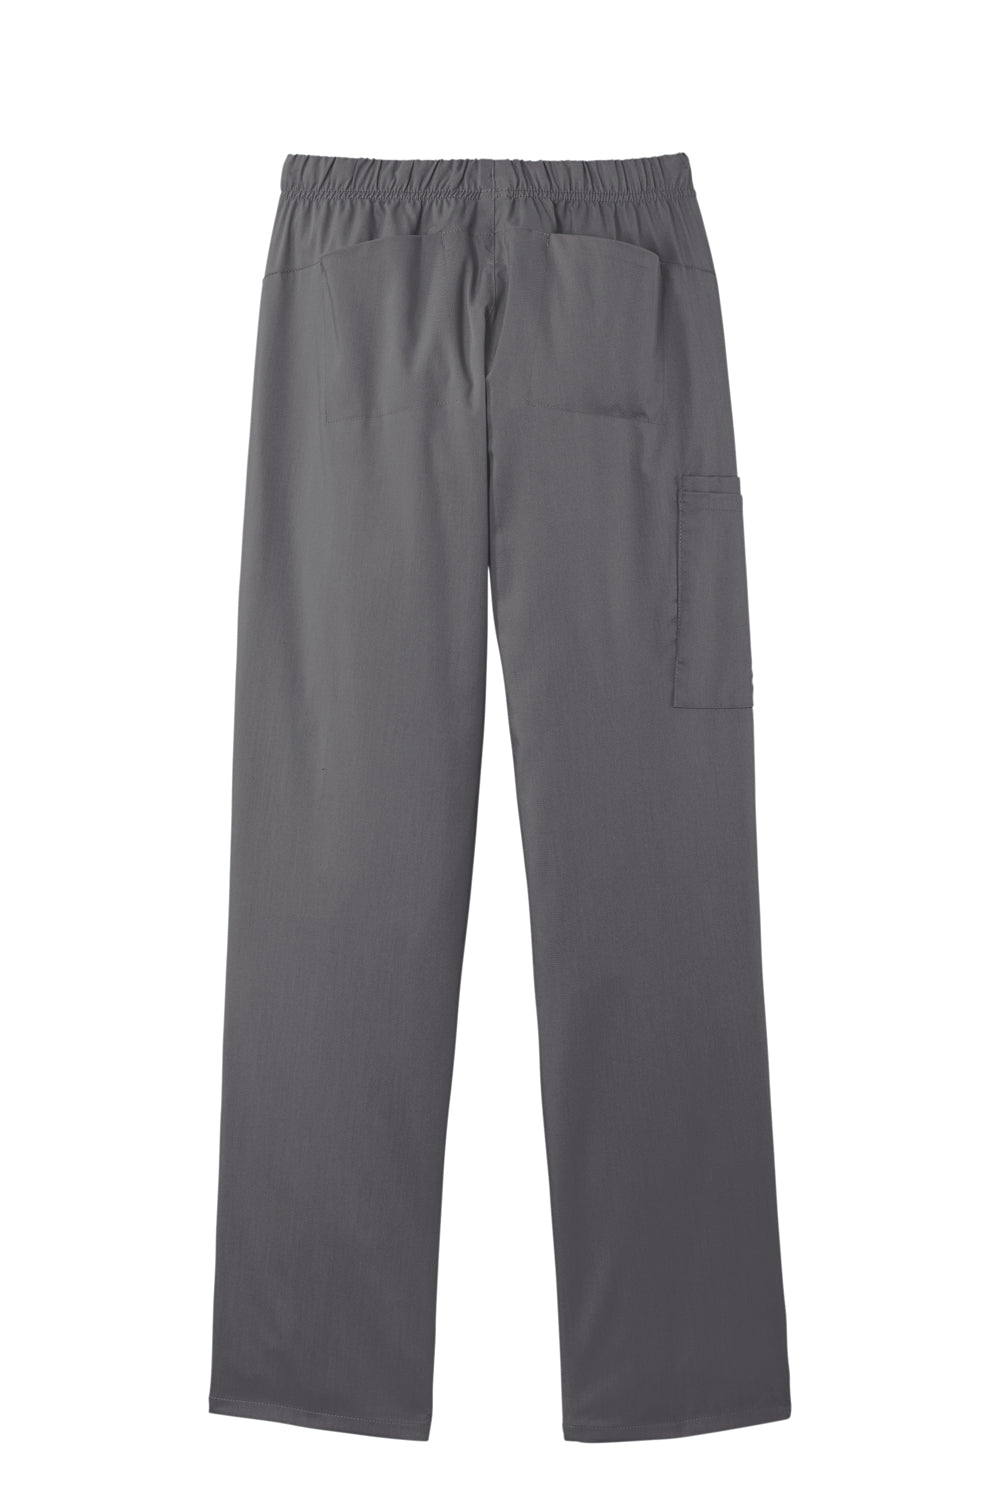 Wonderwink WW4158 Premiere Flex Cargo Pants w/ Pockets Pewter Grey Flat Back